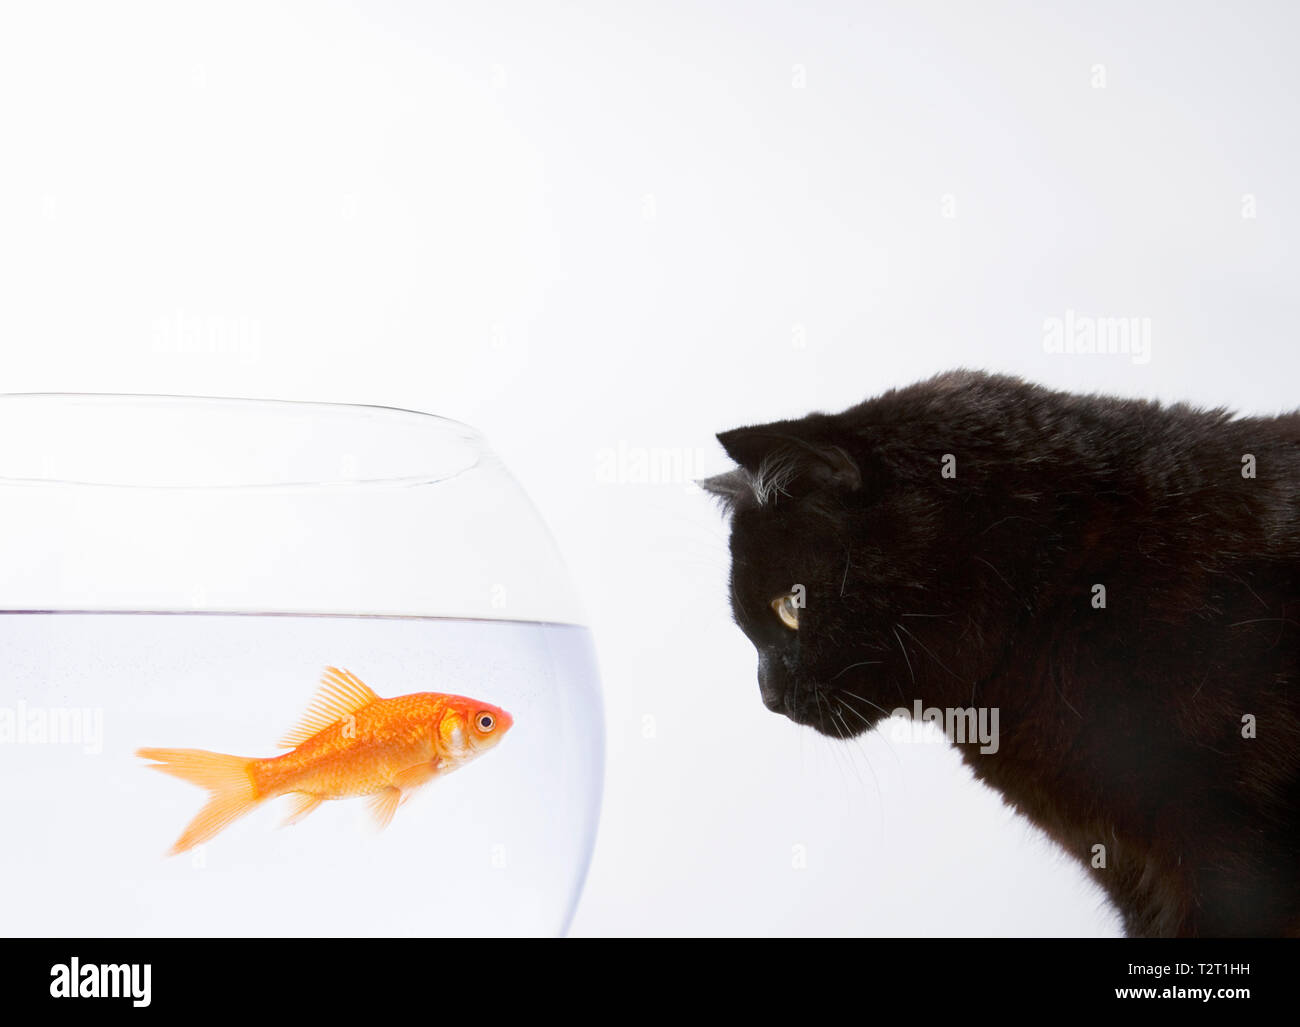 A black cat staring at a goldfish Stock Photo